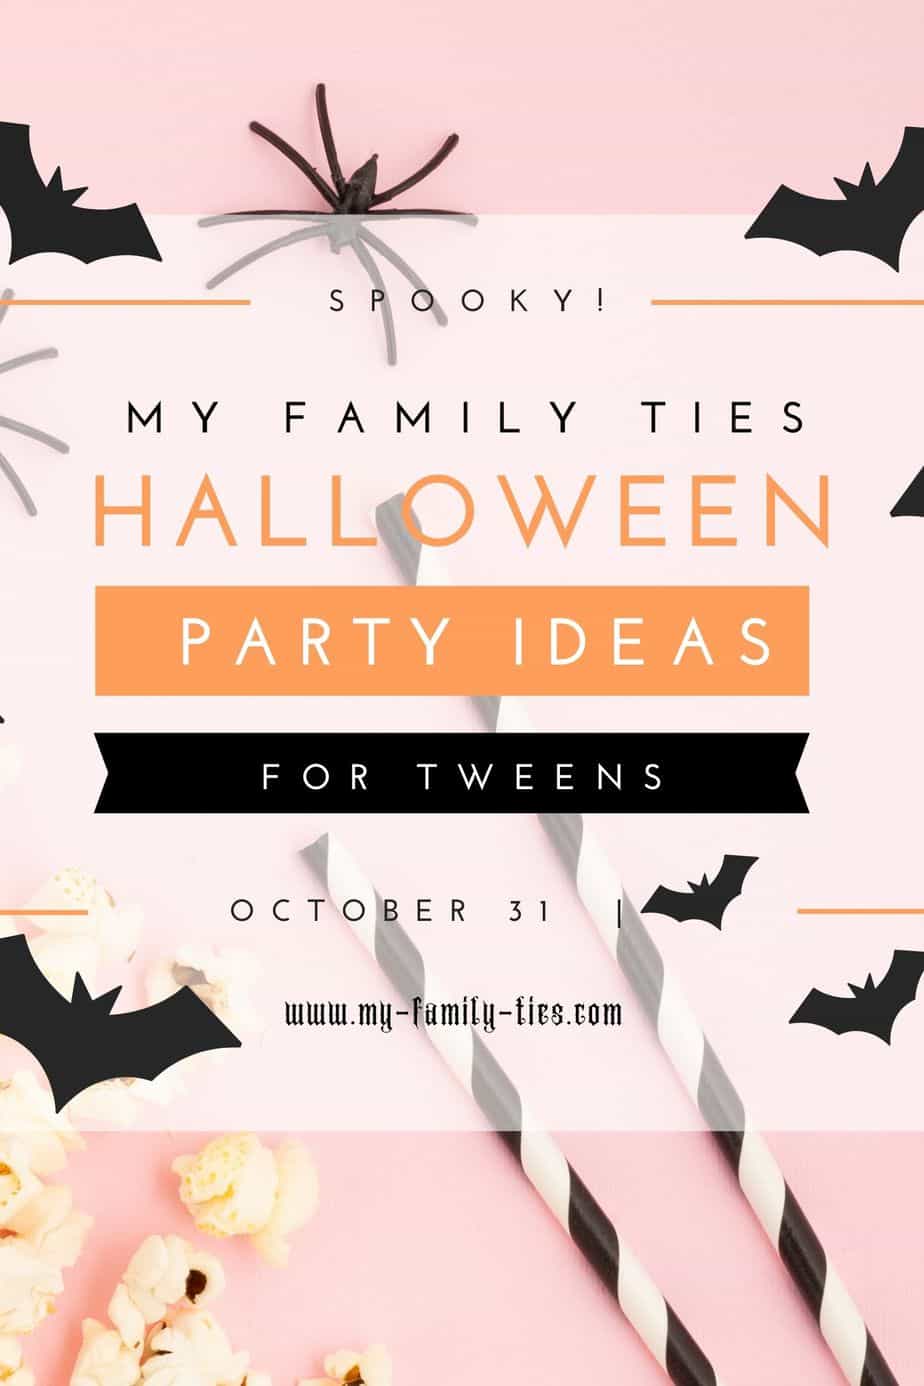 Halloween party ideas for tweens
My Family Ties 
